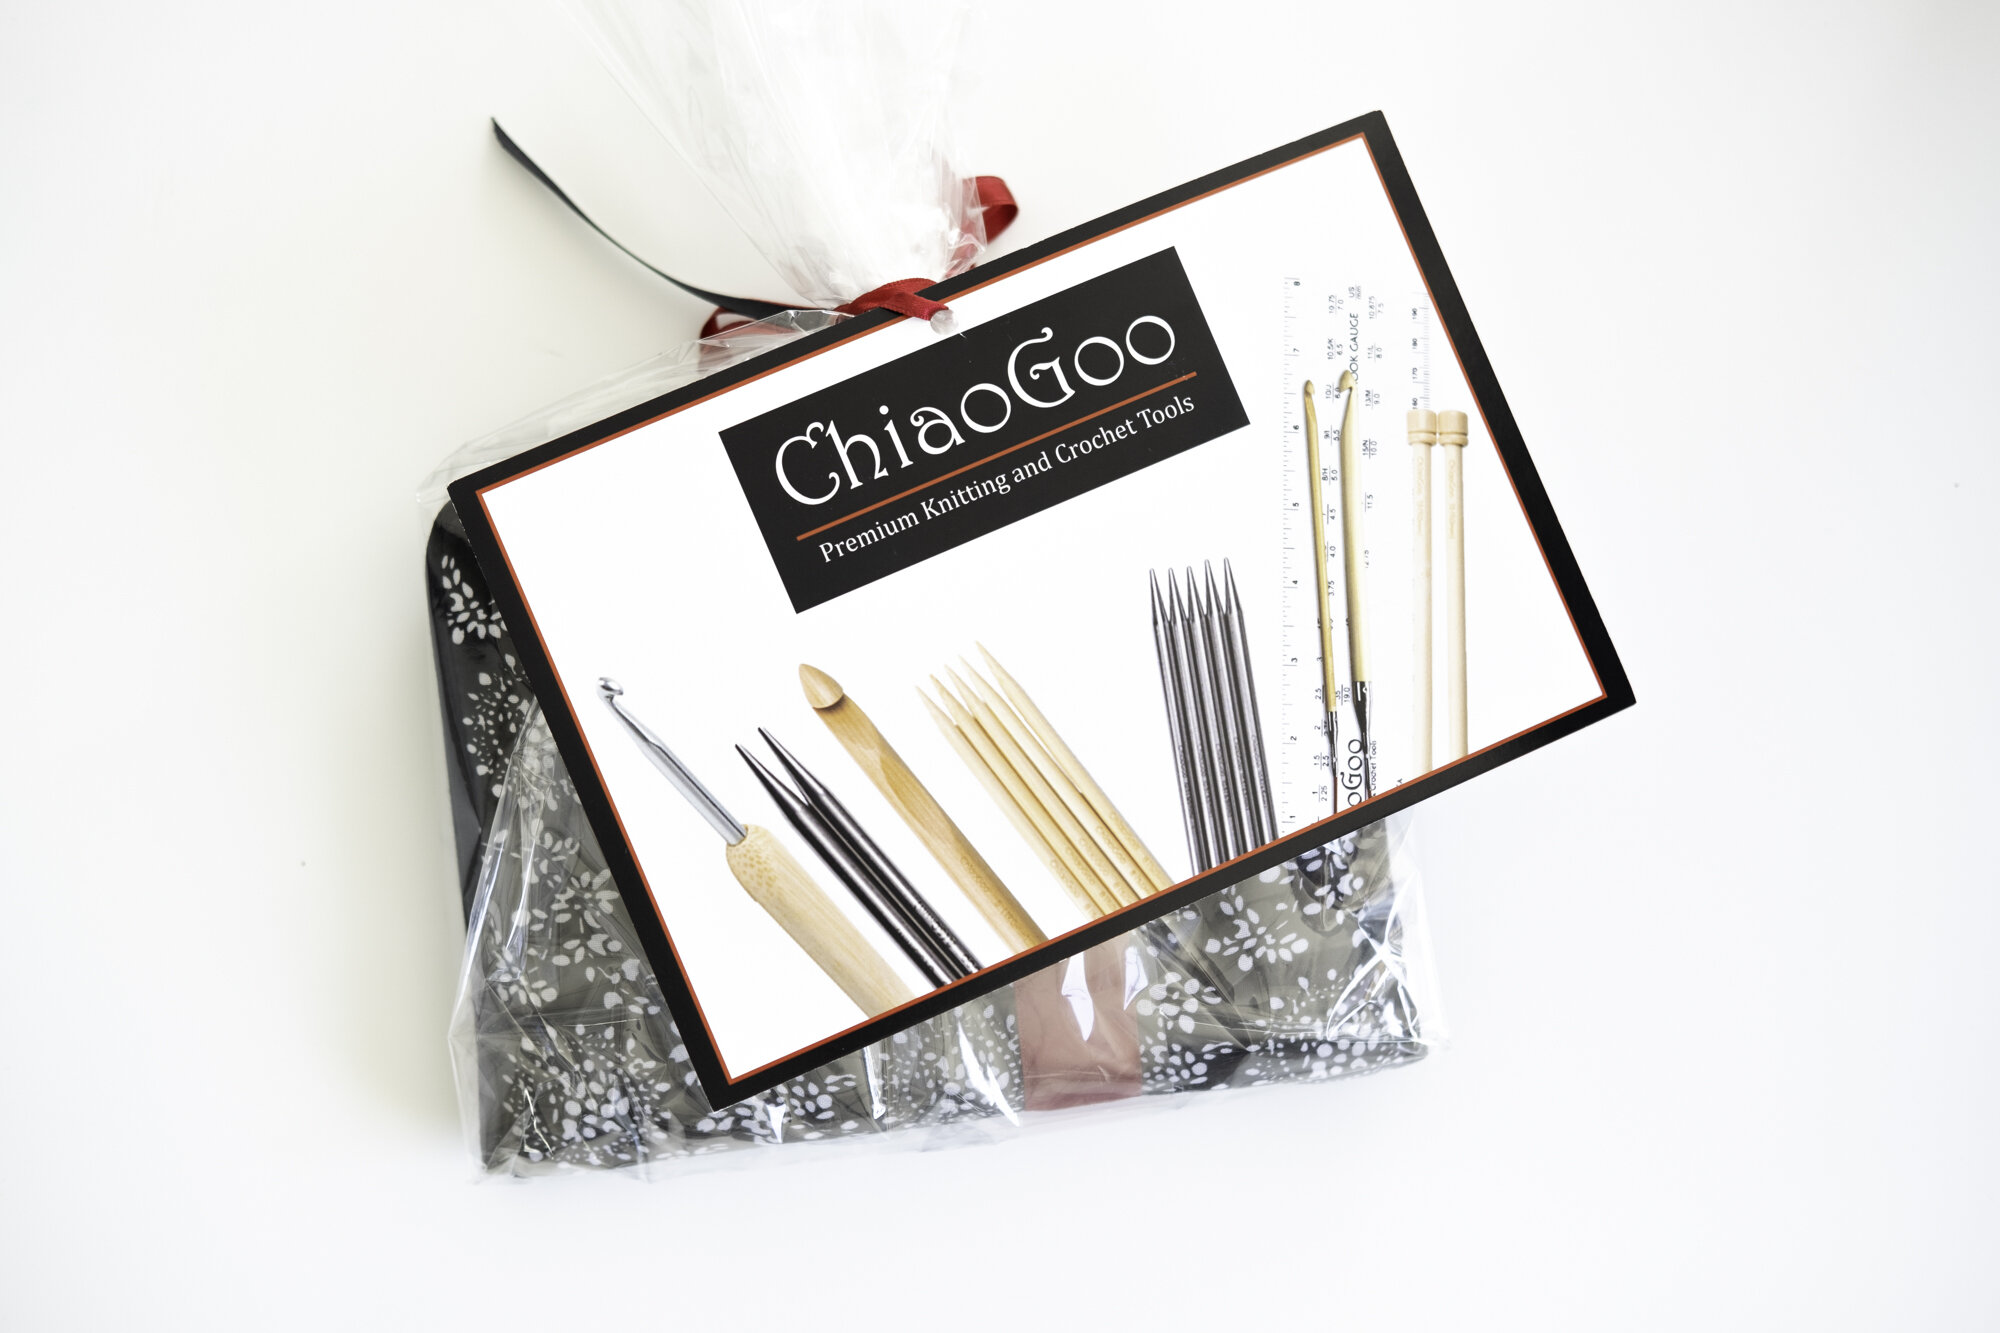 Favorite Gear: Chiaogoo Interchangeable Knitting Needles - Budget